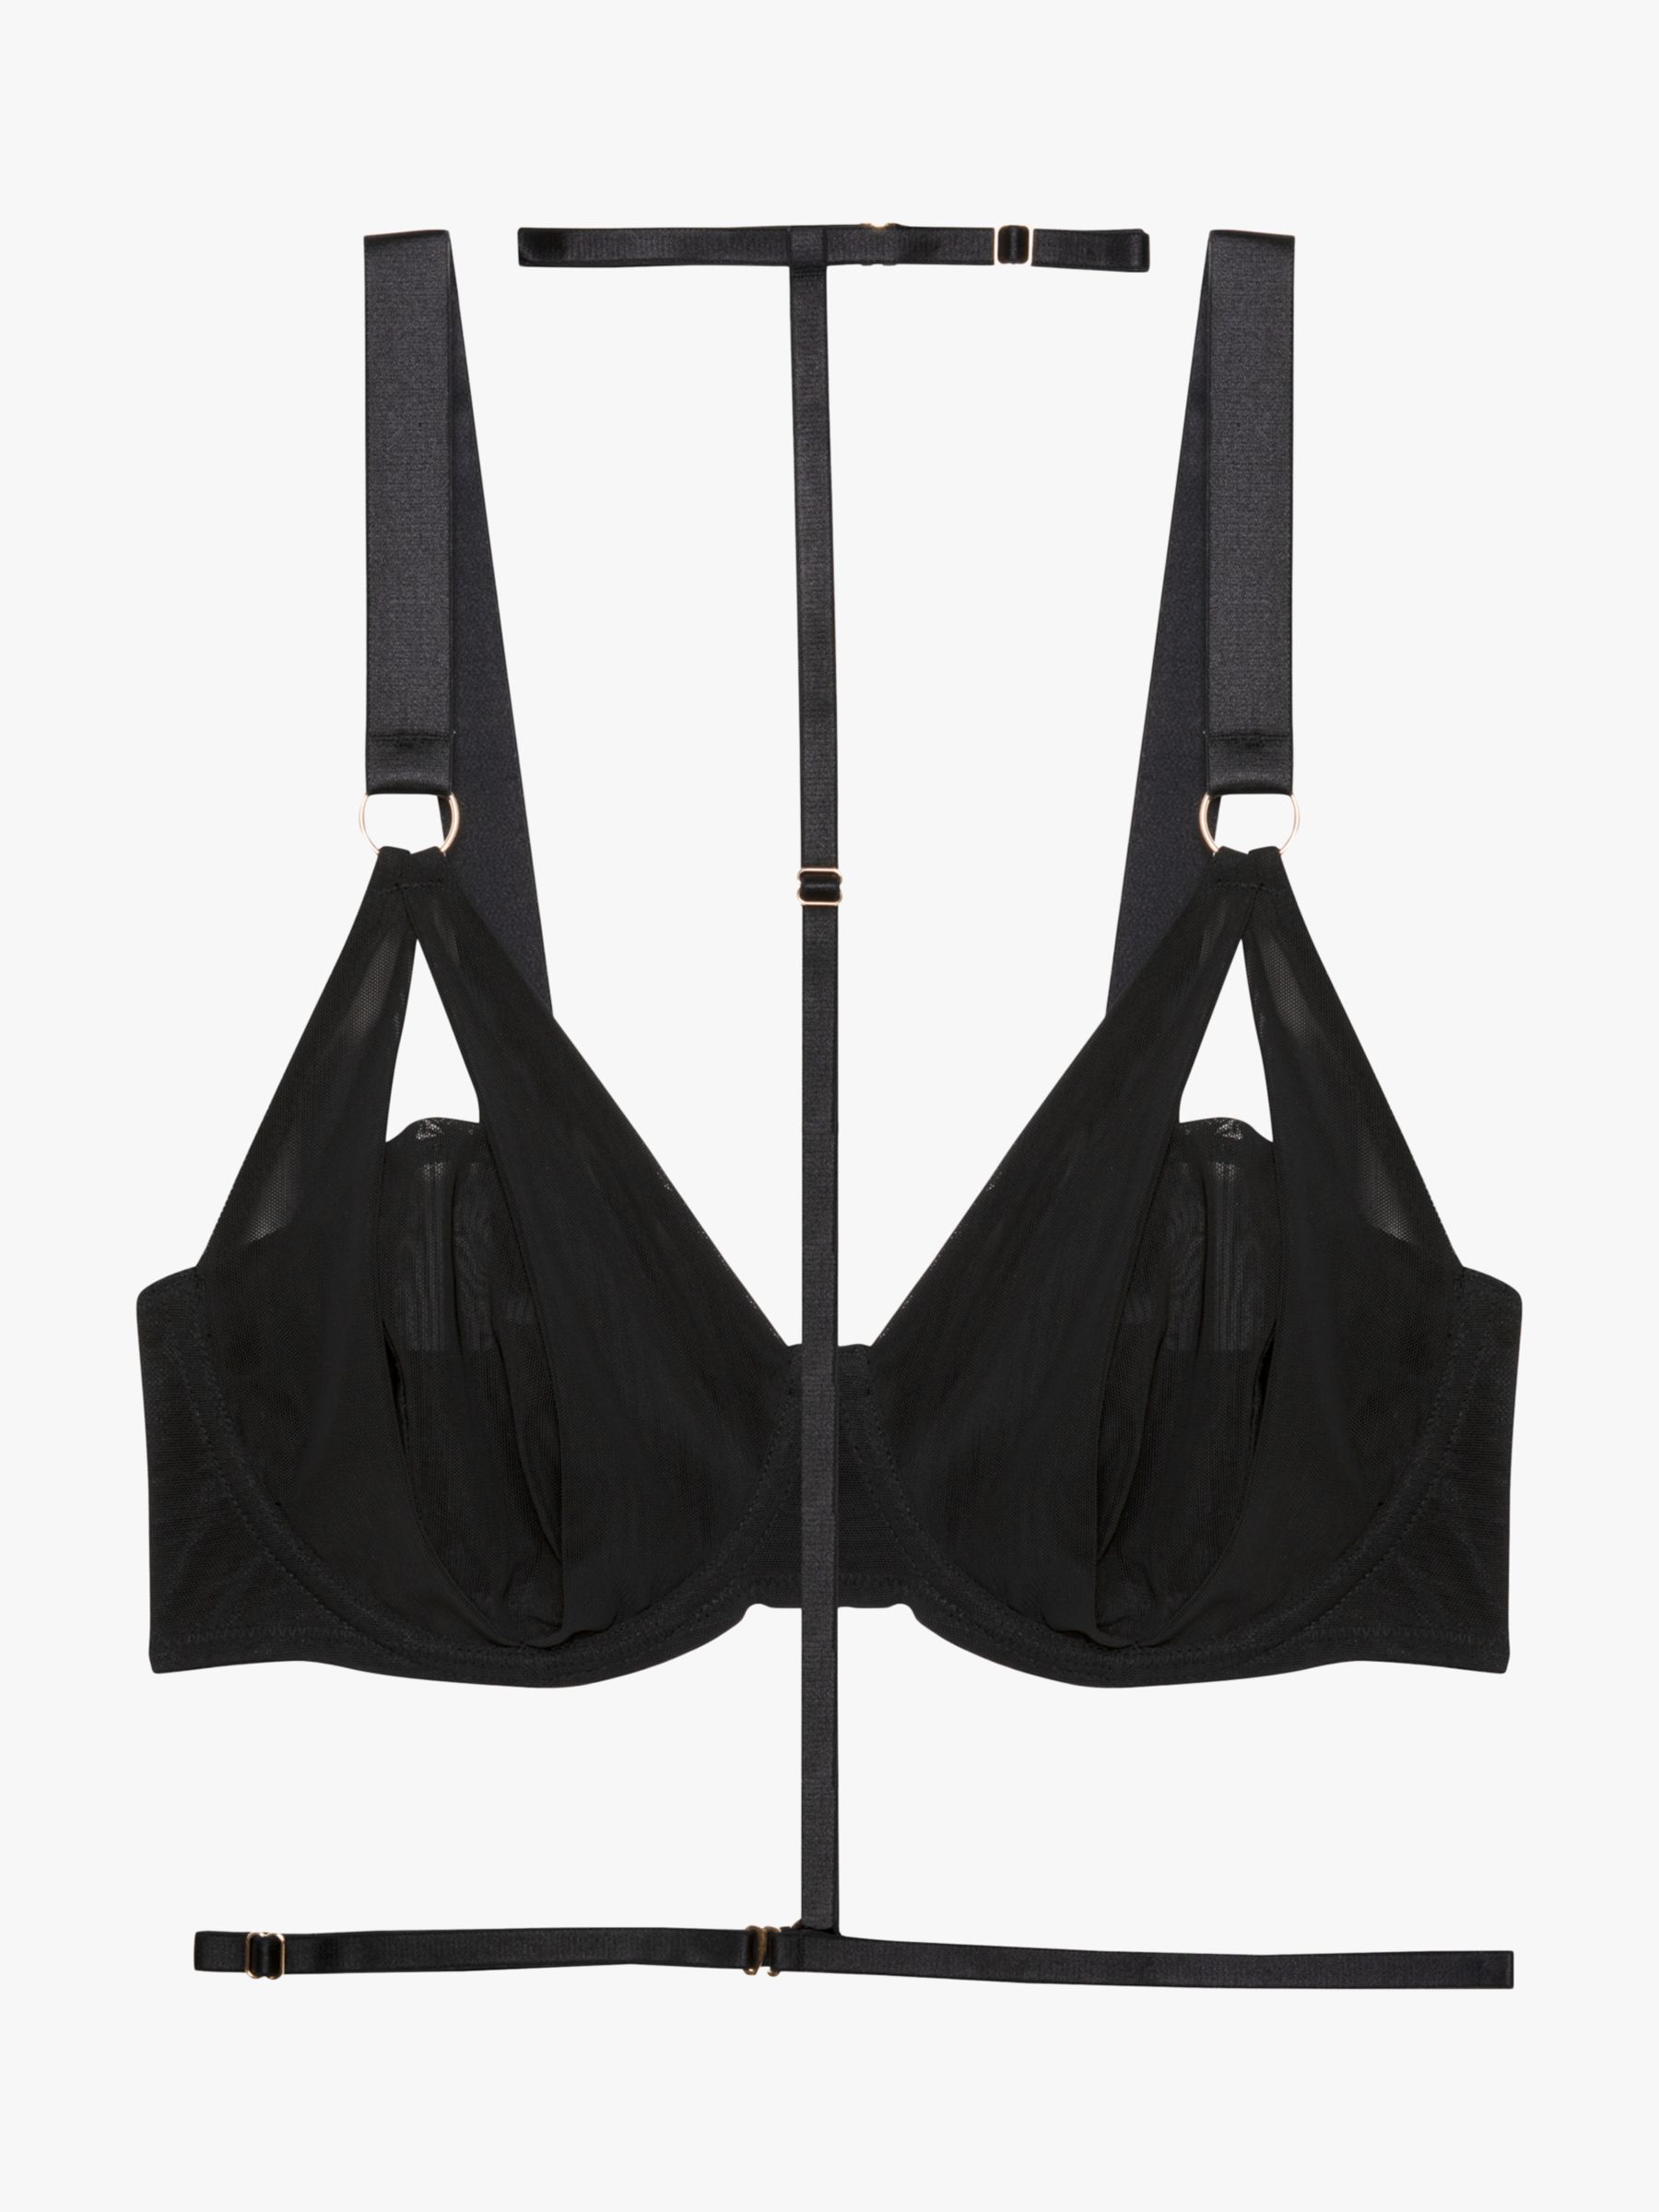 Buy JAEC Wired Lace Bra Boyshort Lingerie Set Black at